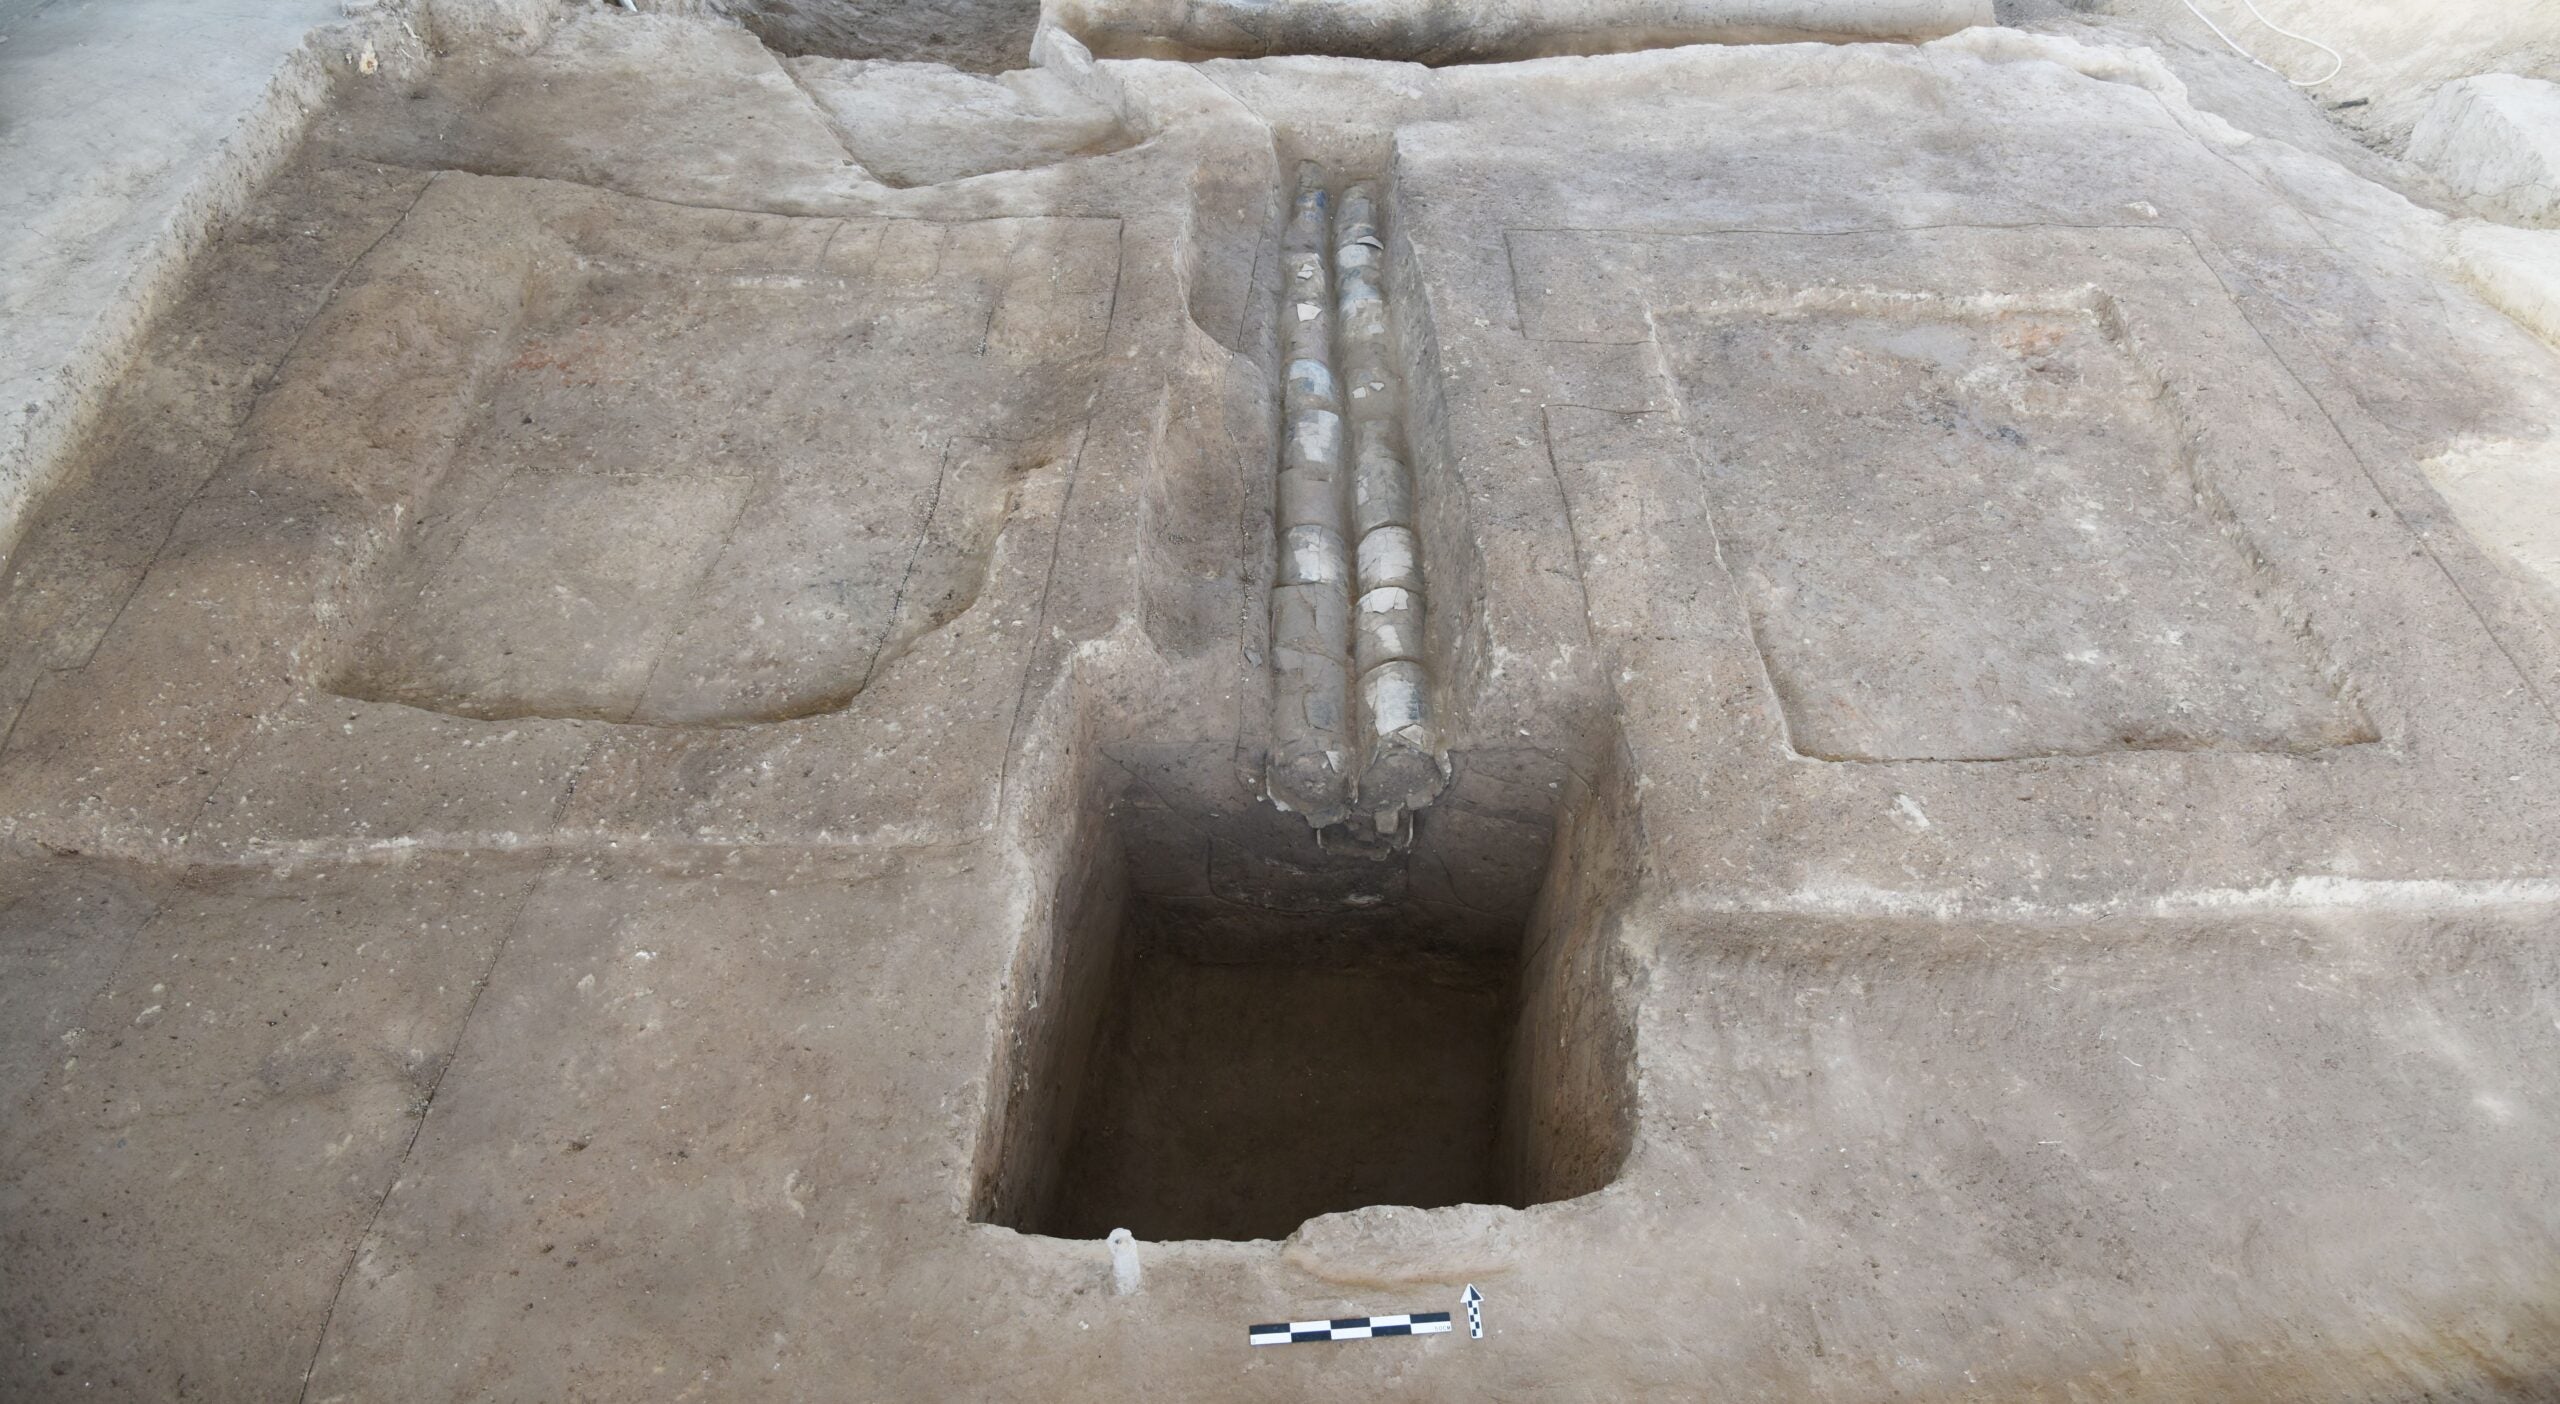 Chinese city was using plumbing 4,000 years ago